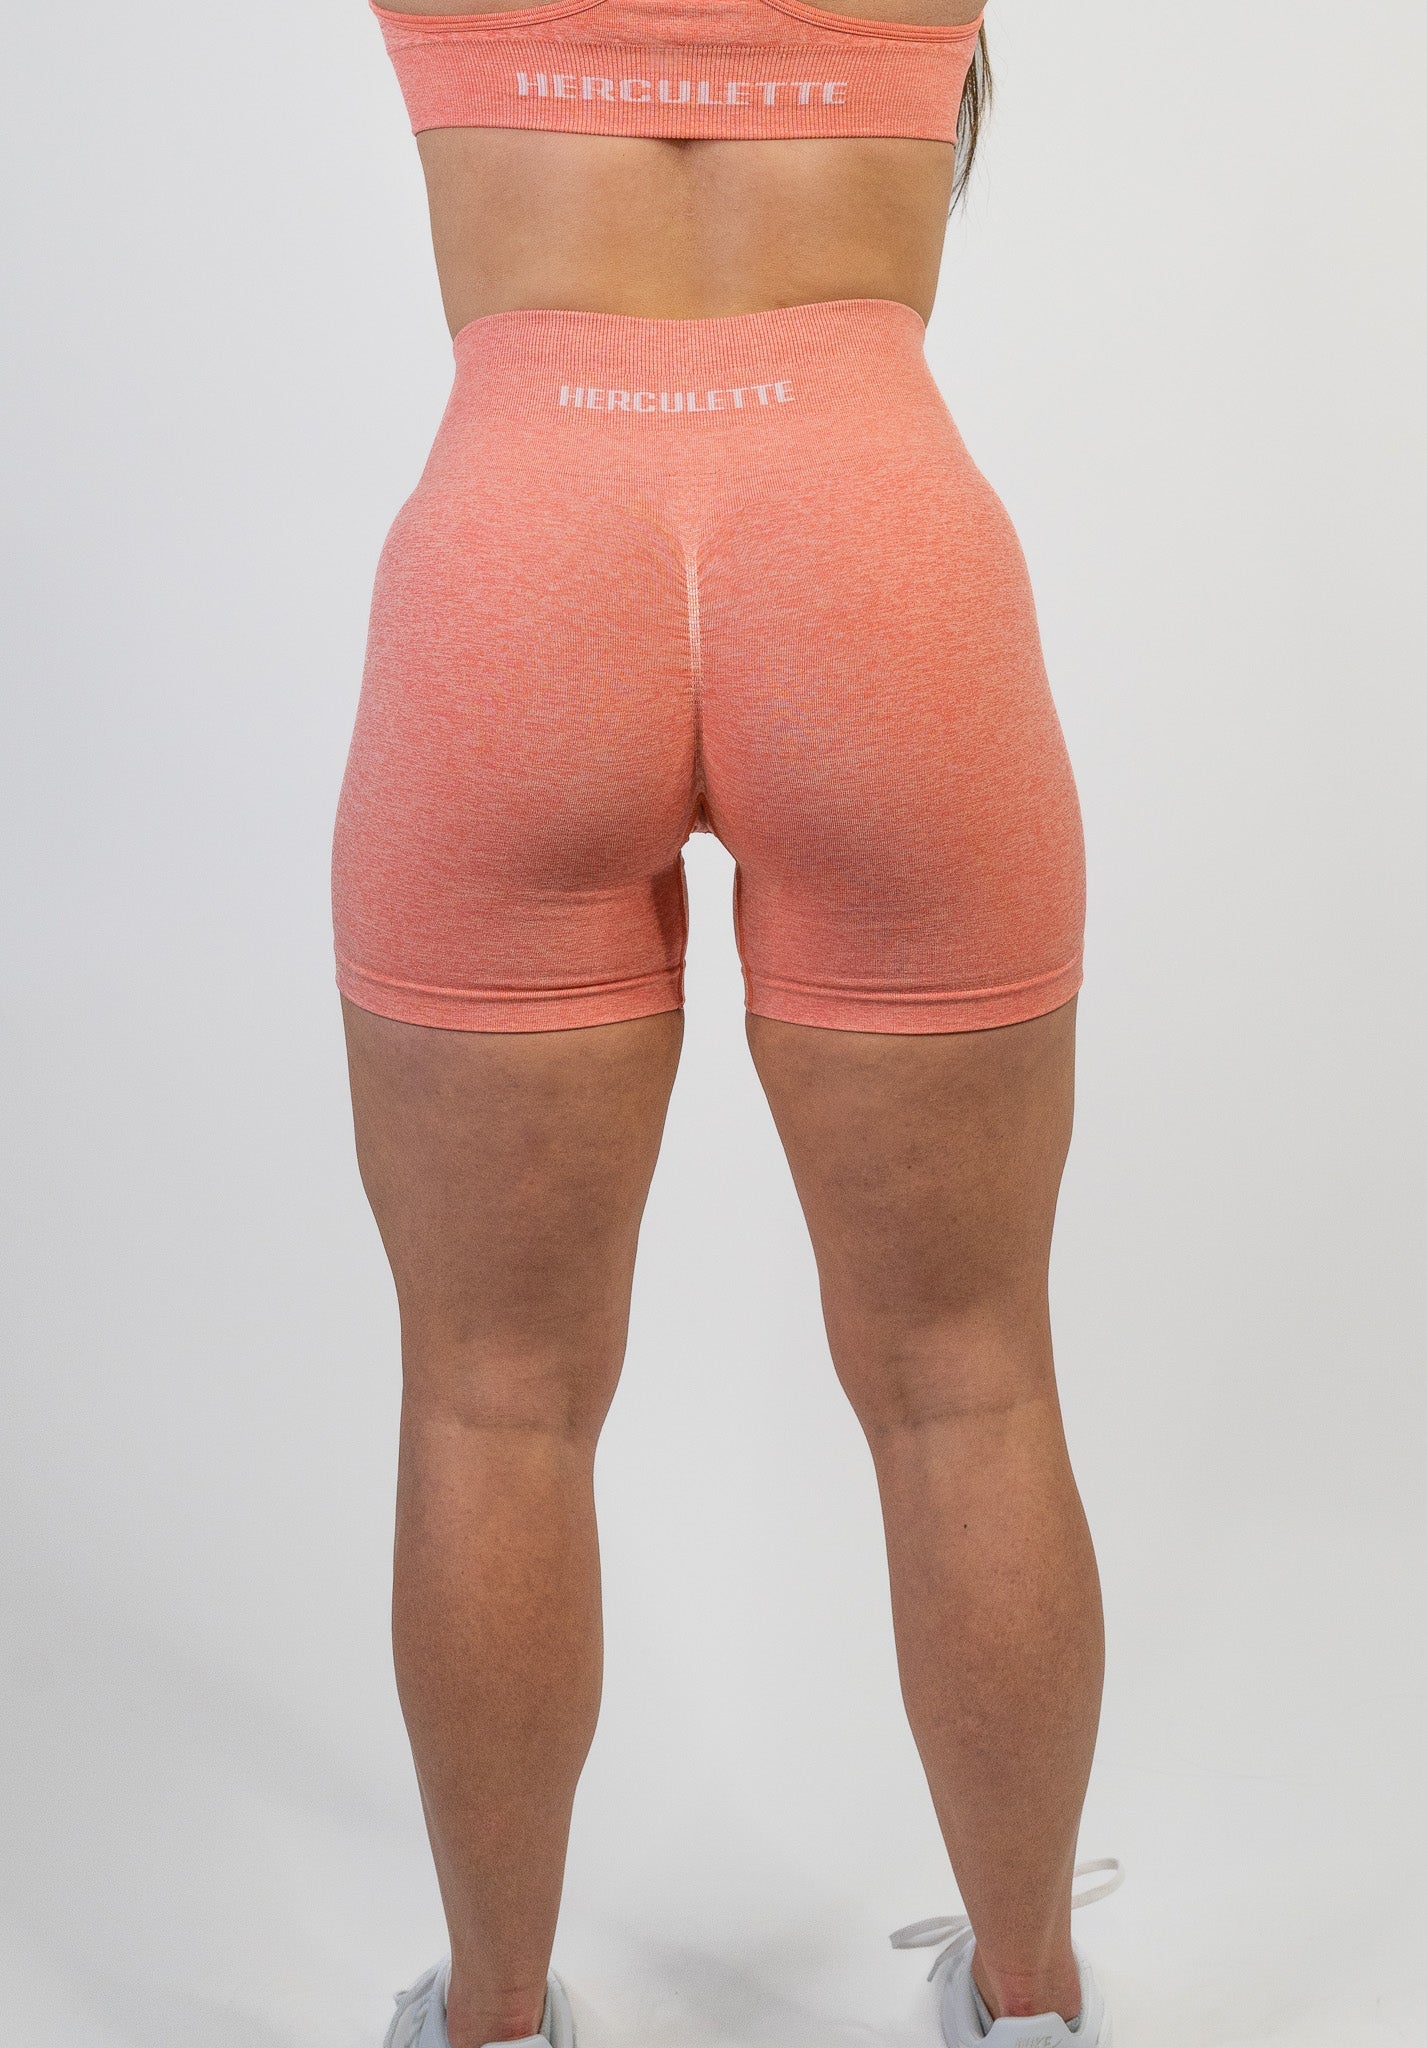 Premier Shorts - Coral - HERCULETTEShorts